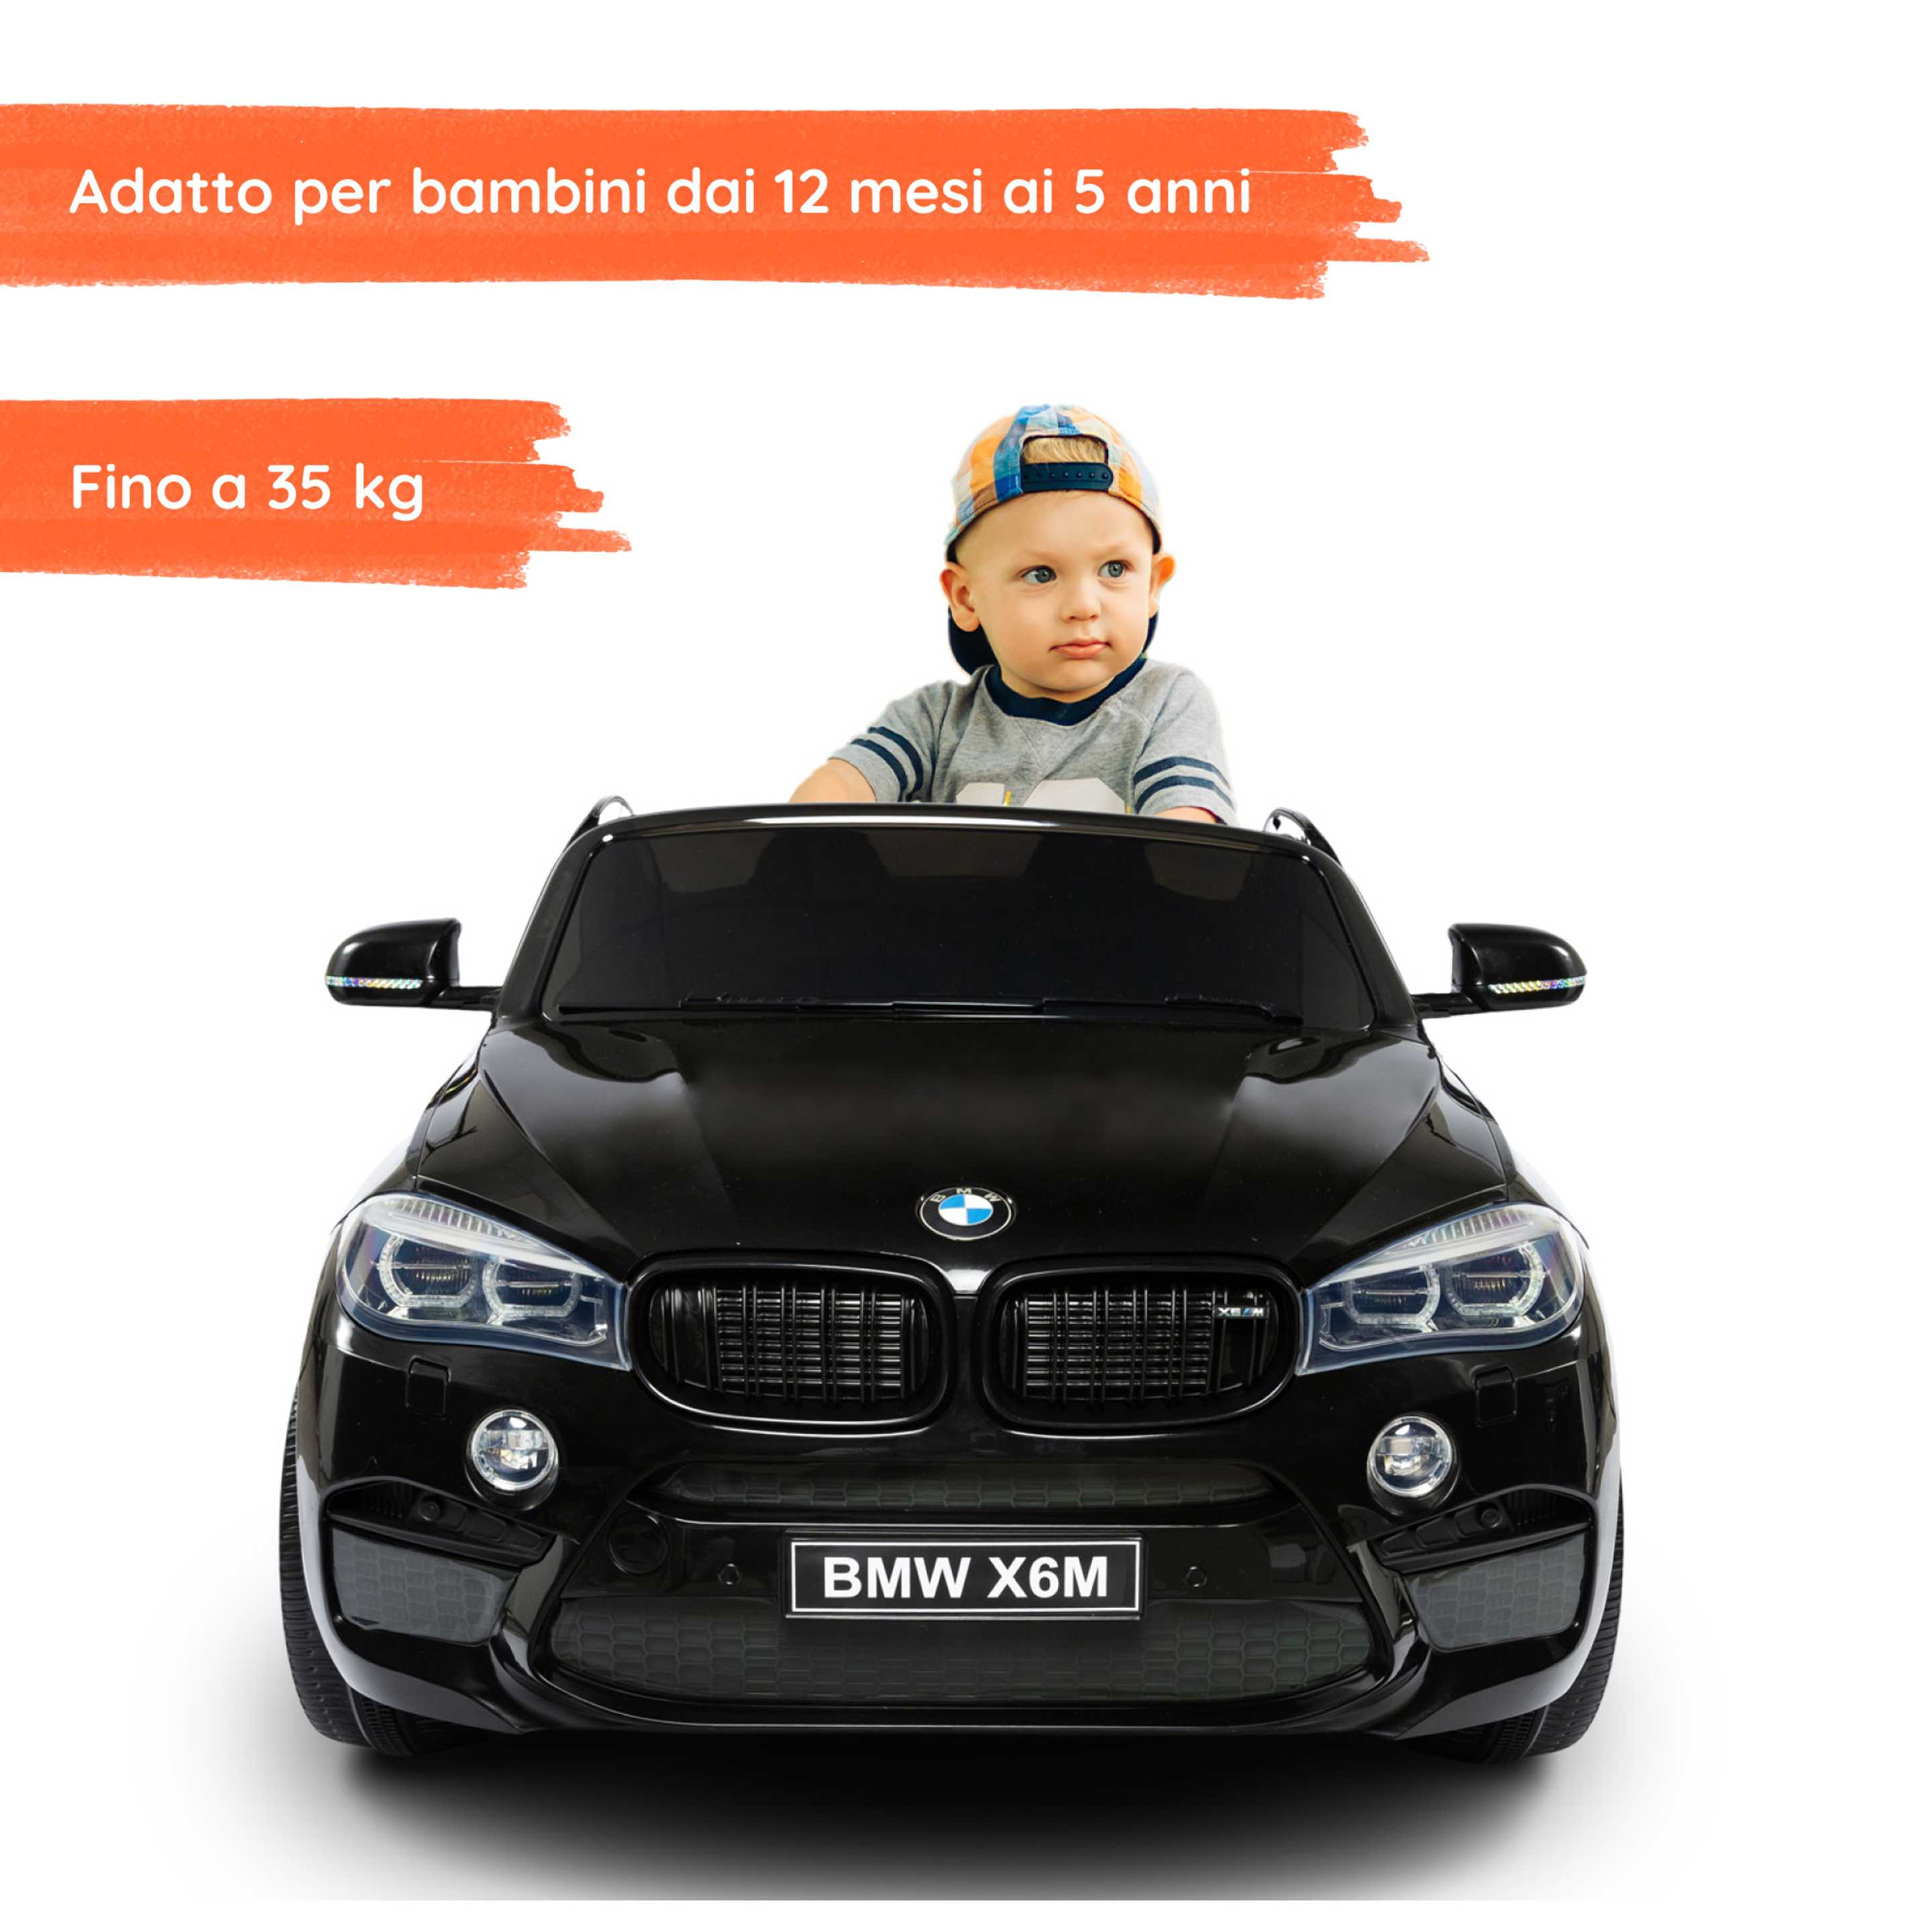 BMW X6 2P Nera con bambino